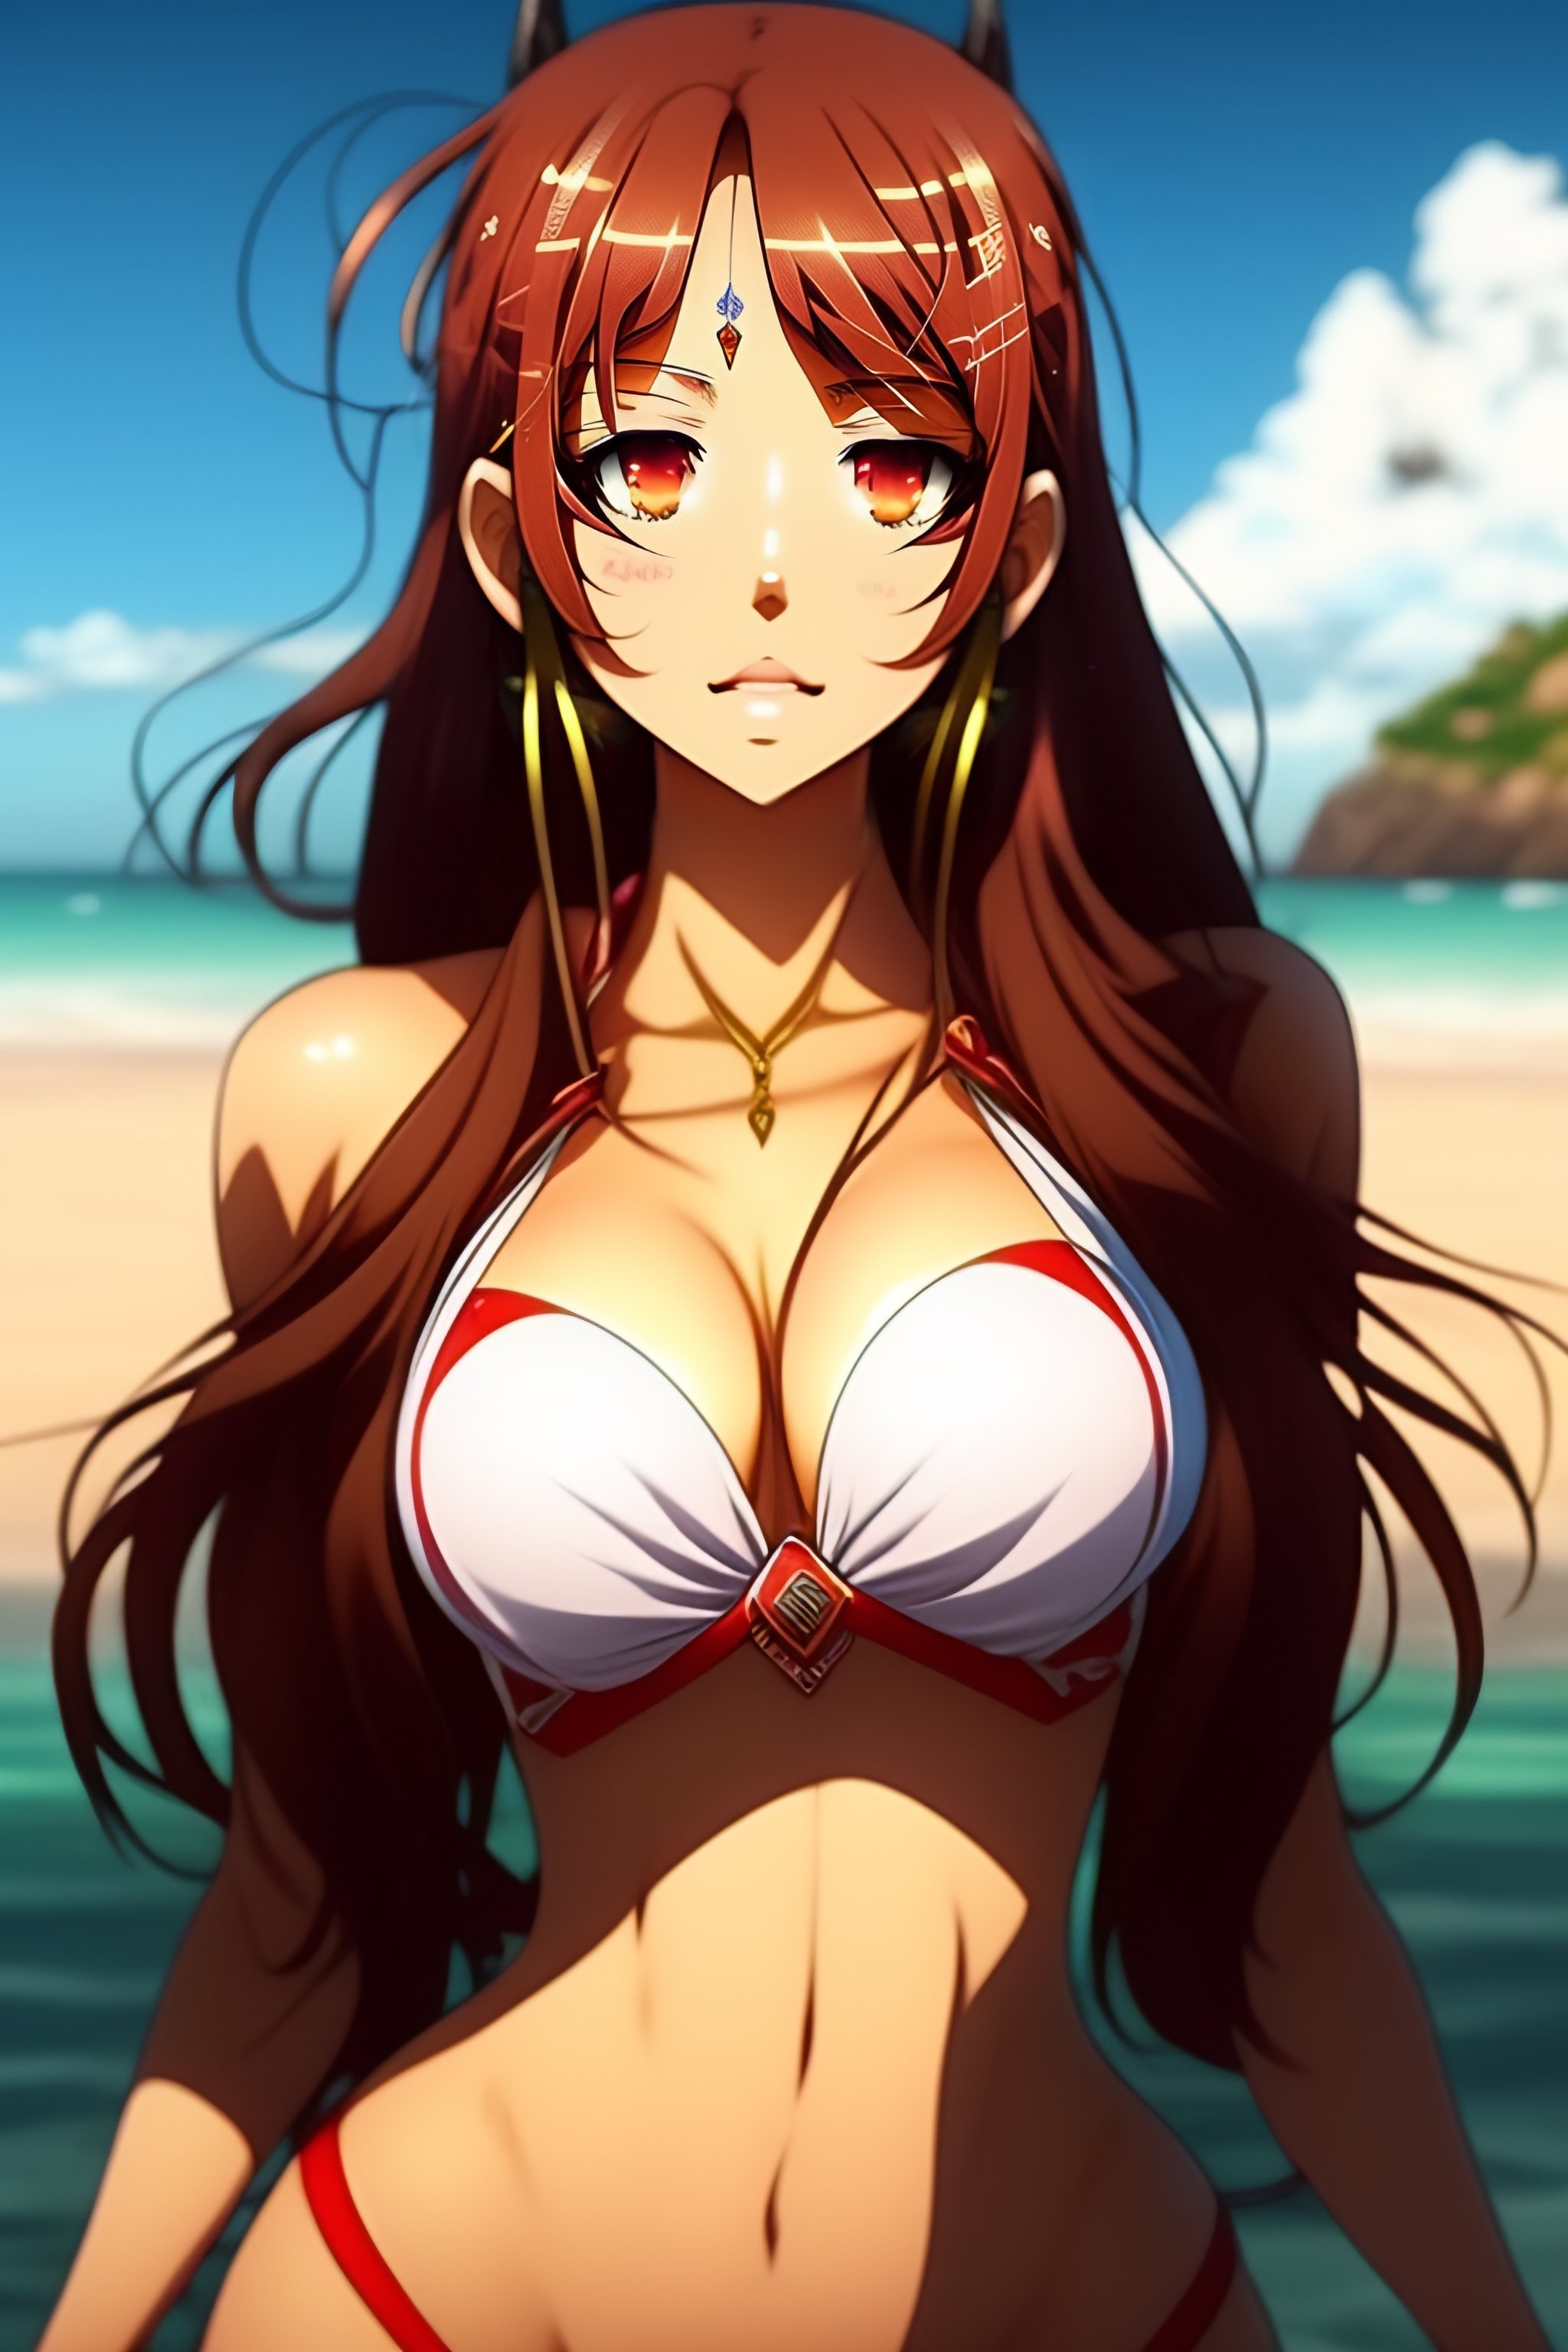 anirudh kohli add hot anime girl in bikini photo